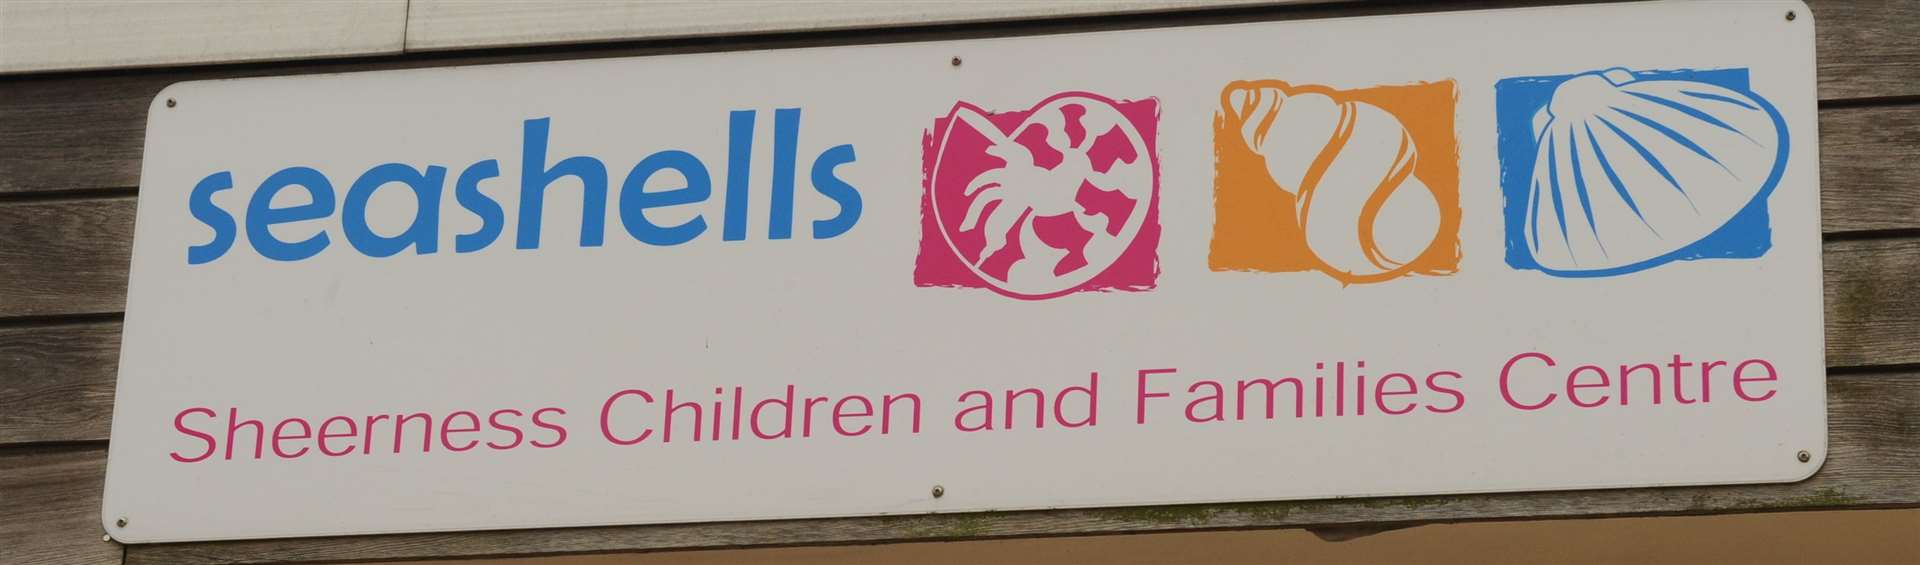 Seashells Children and Families Centre, Rose Street, Sheerness. Picture: Steve Crispe